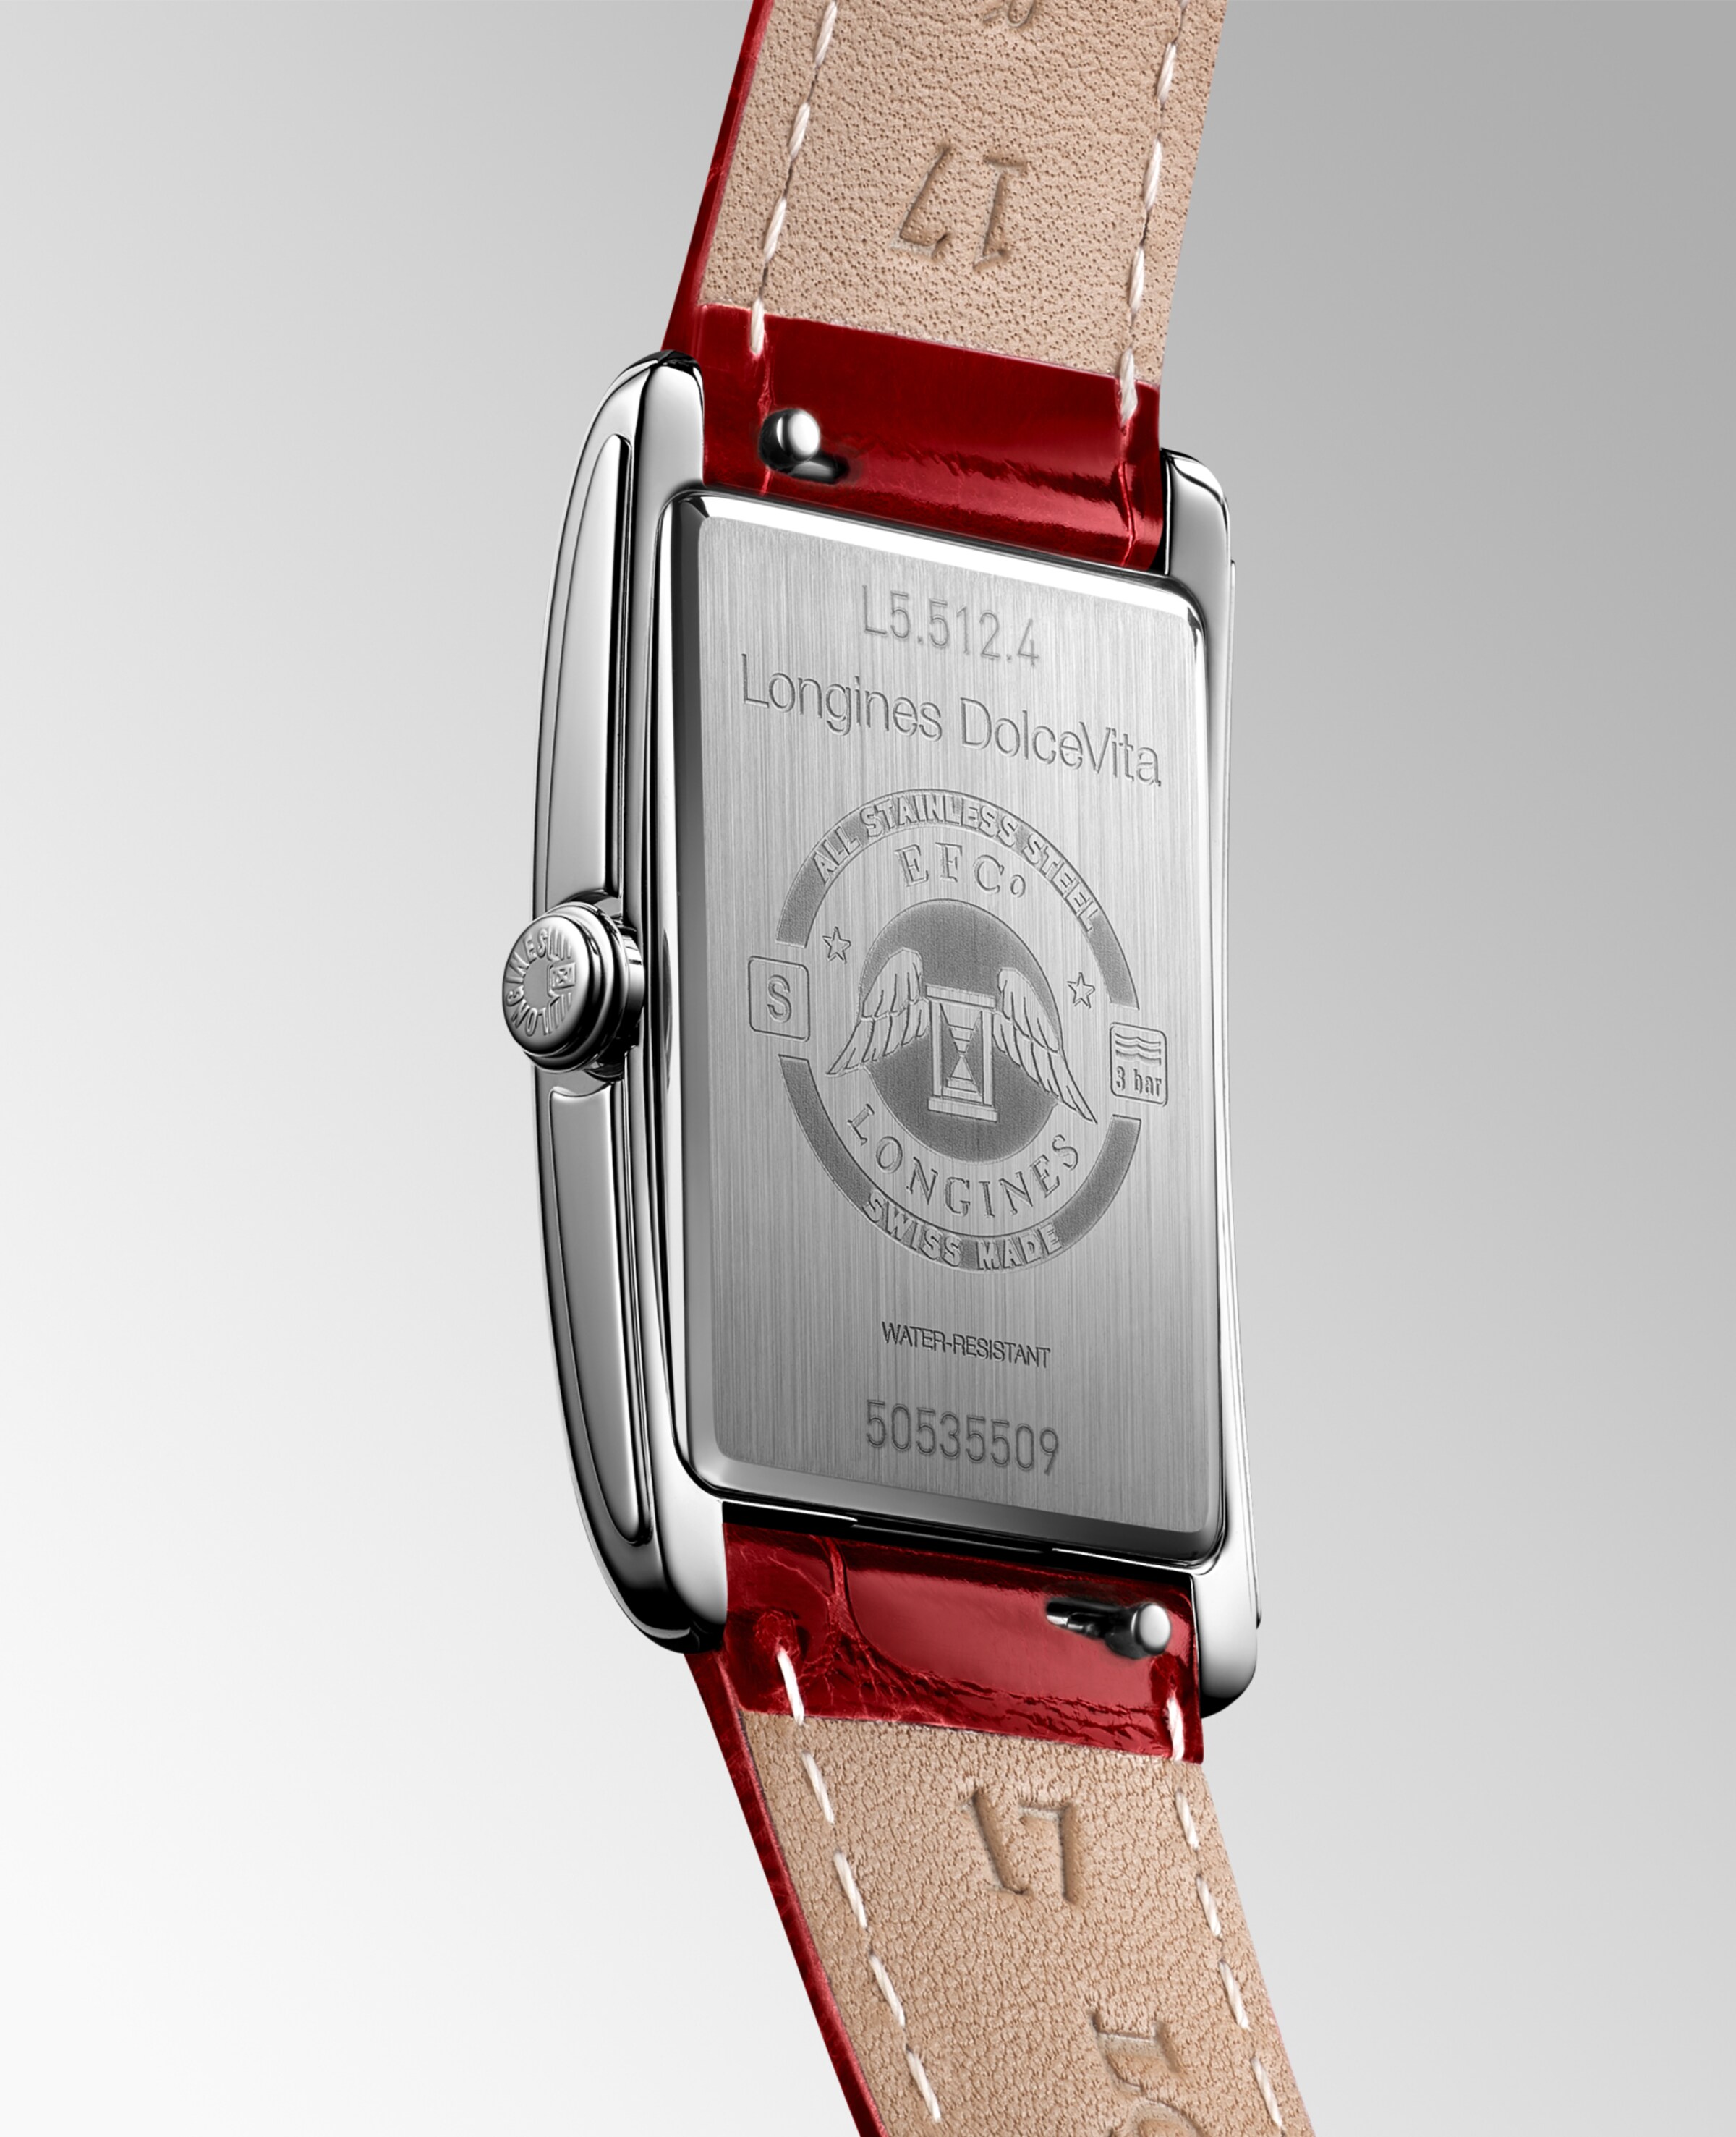 Longines DOLCEVITA Quartz Stainless steel Watch - L5.512.4.71.5